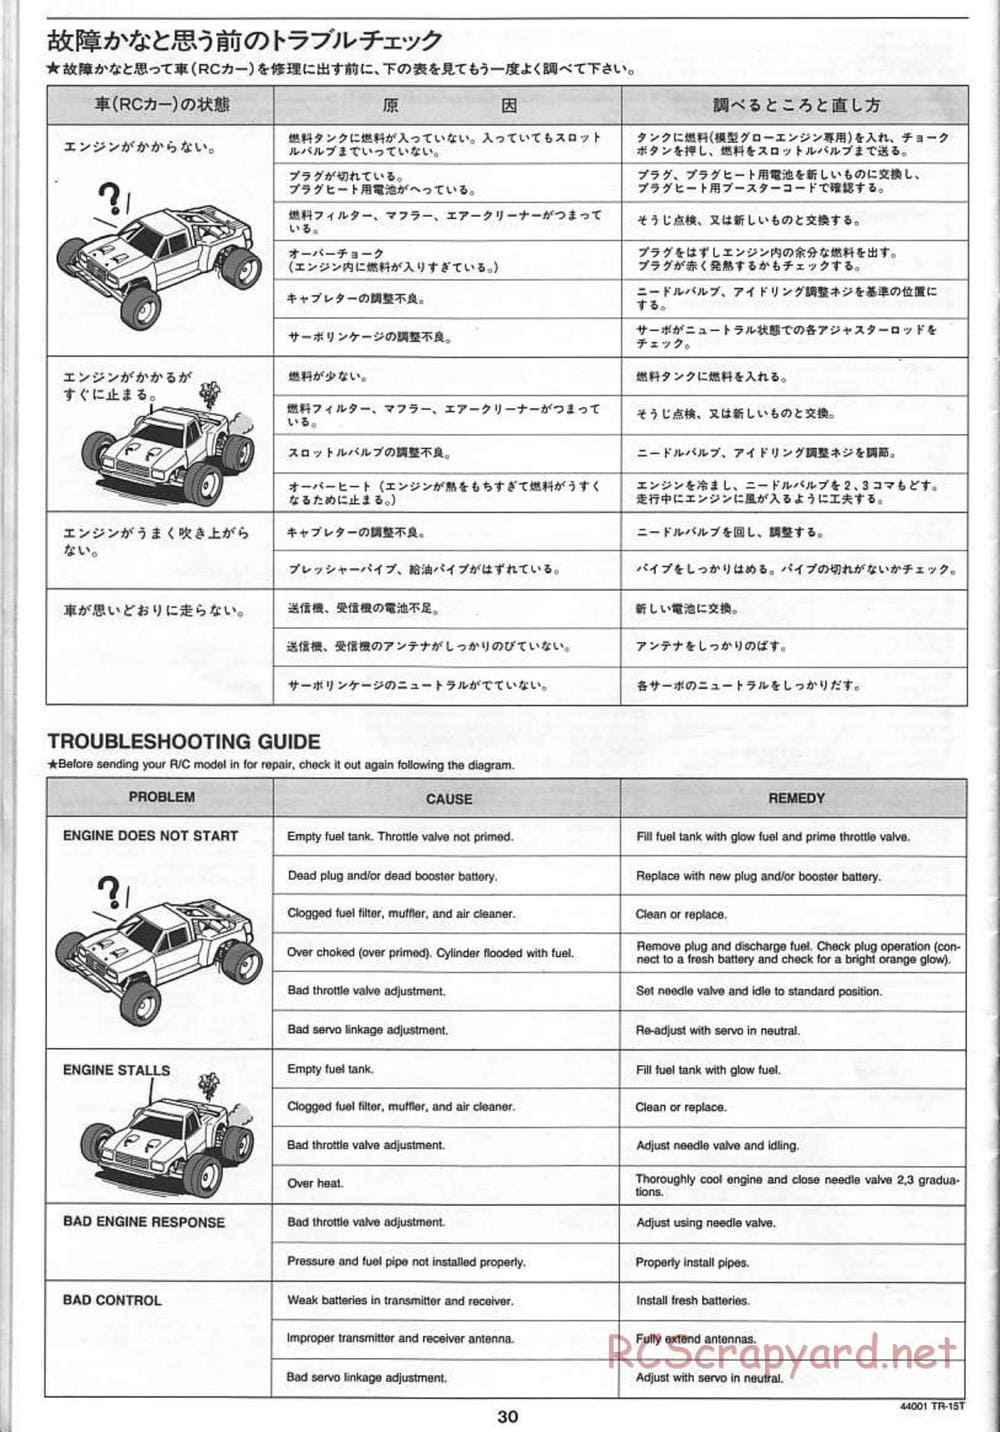 Tamiya - Stadium Racing Truck TR-15T Chassis - Manual - Page 30